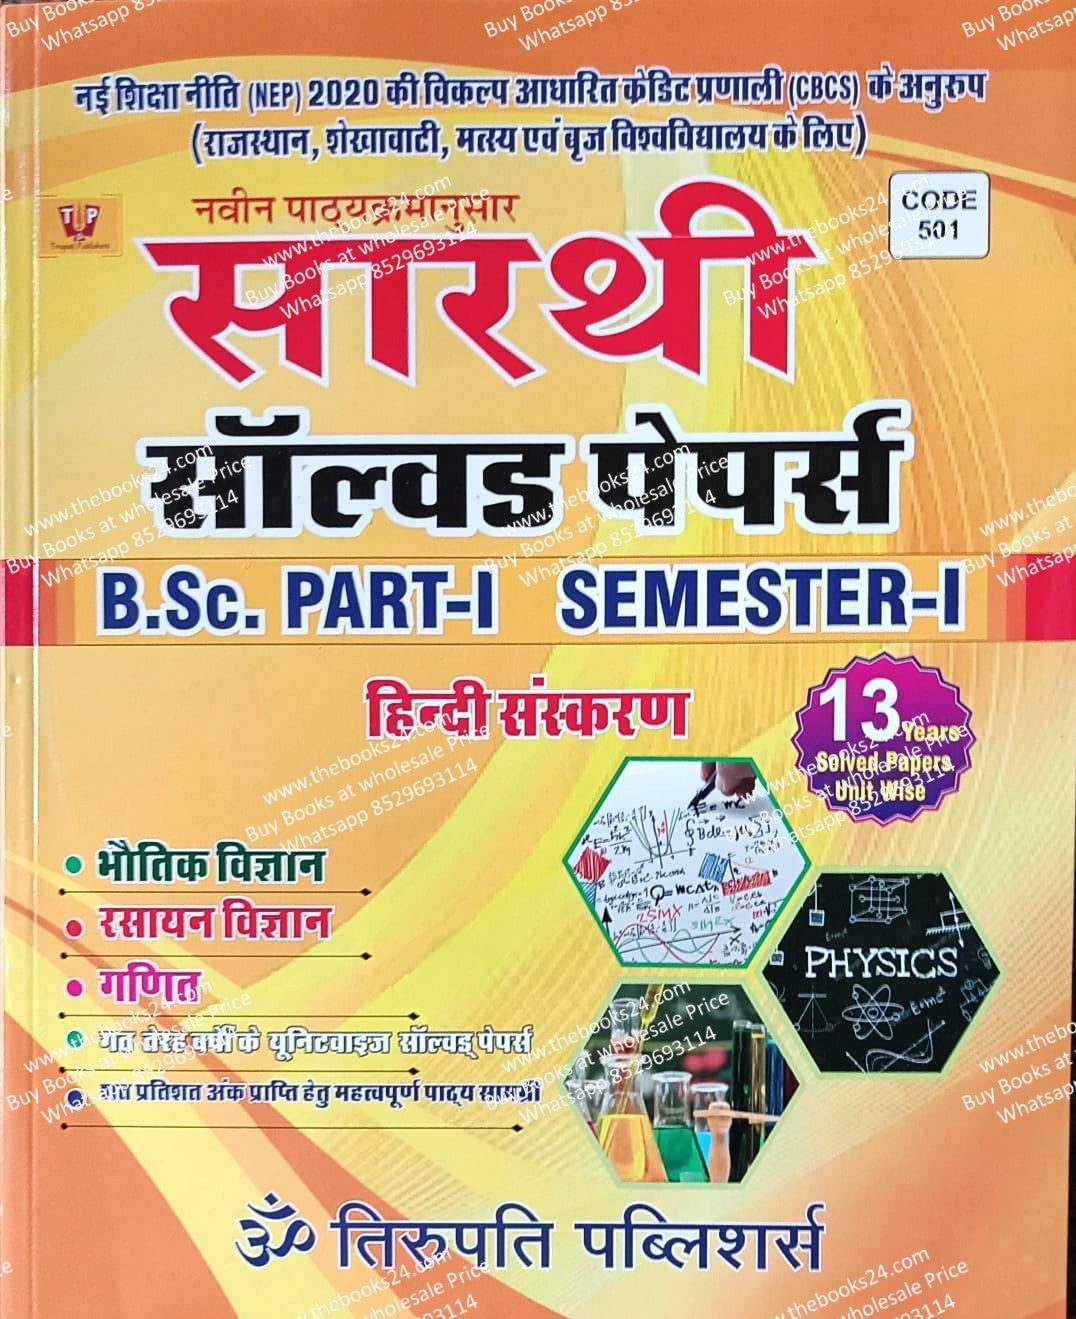 Sarthi B.Sc. Part-I (Semester-I) PCM Solved Paper in Hindi